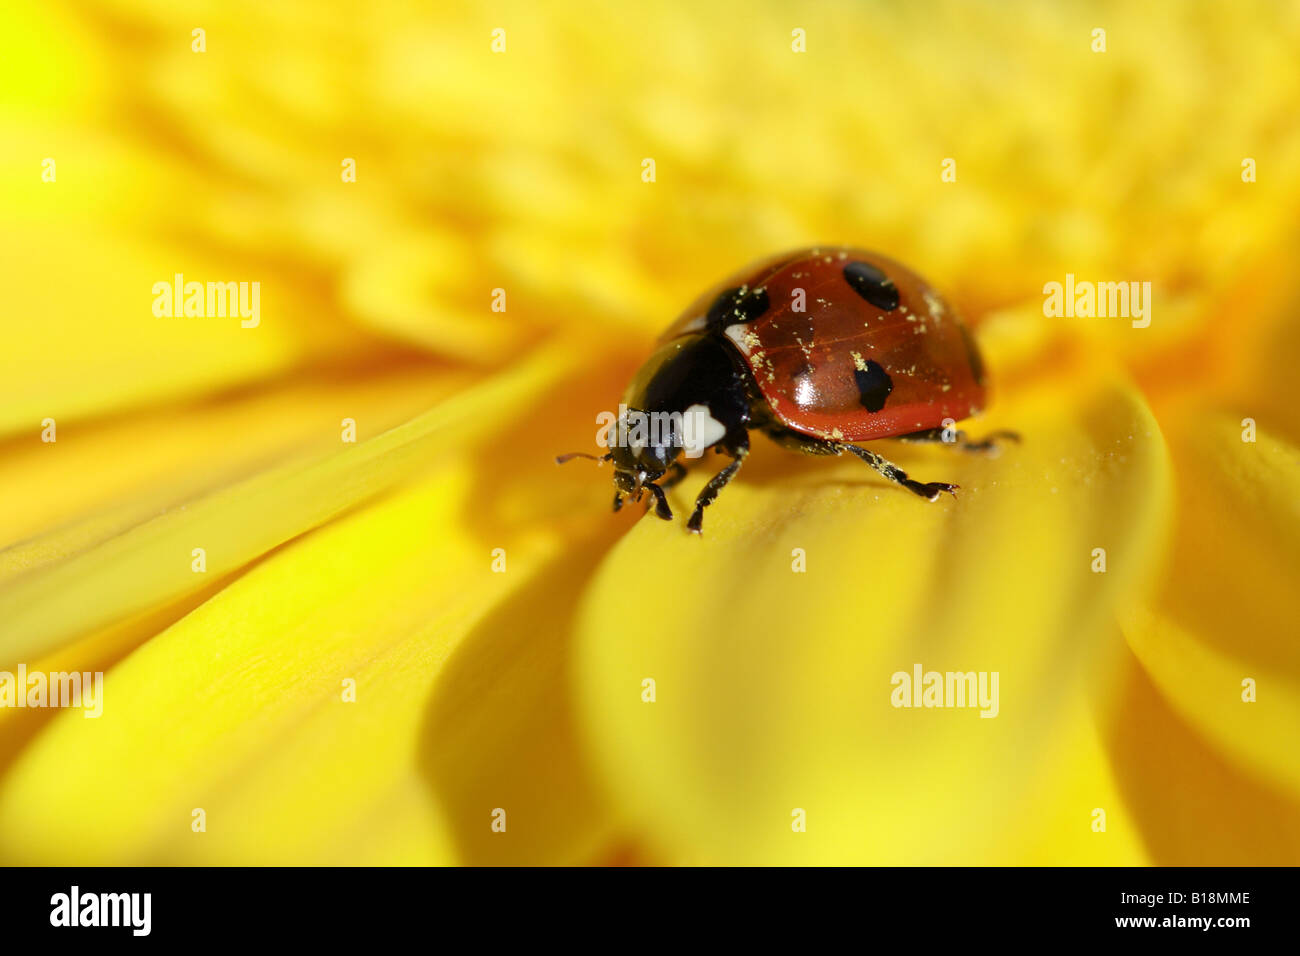 Lady bug walking on yellow gerber daisy flower Stock Photo